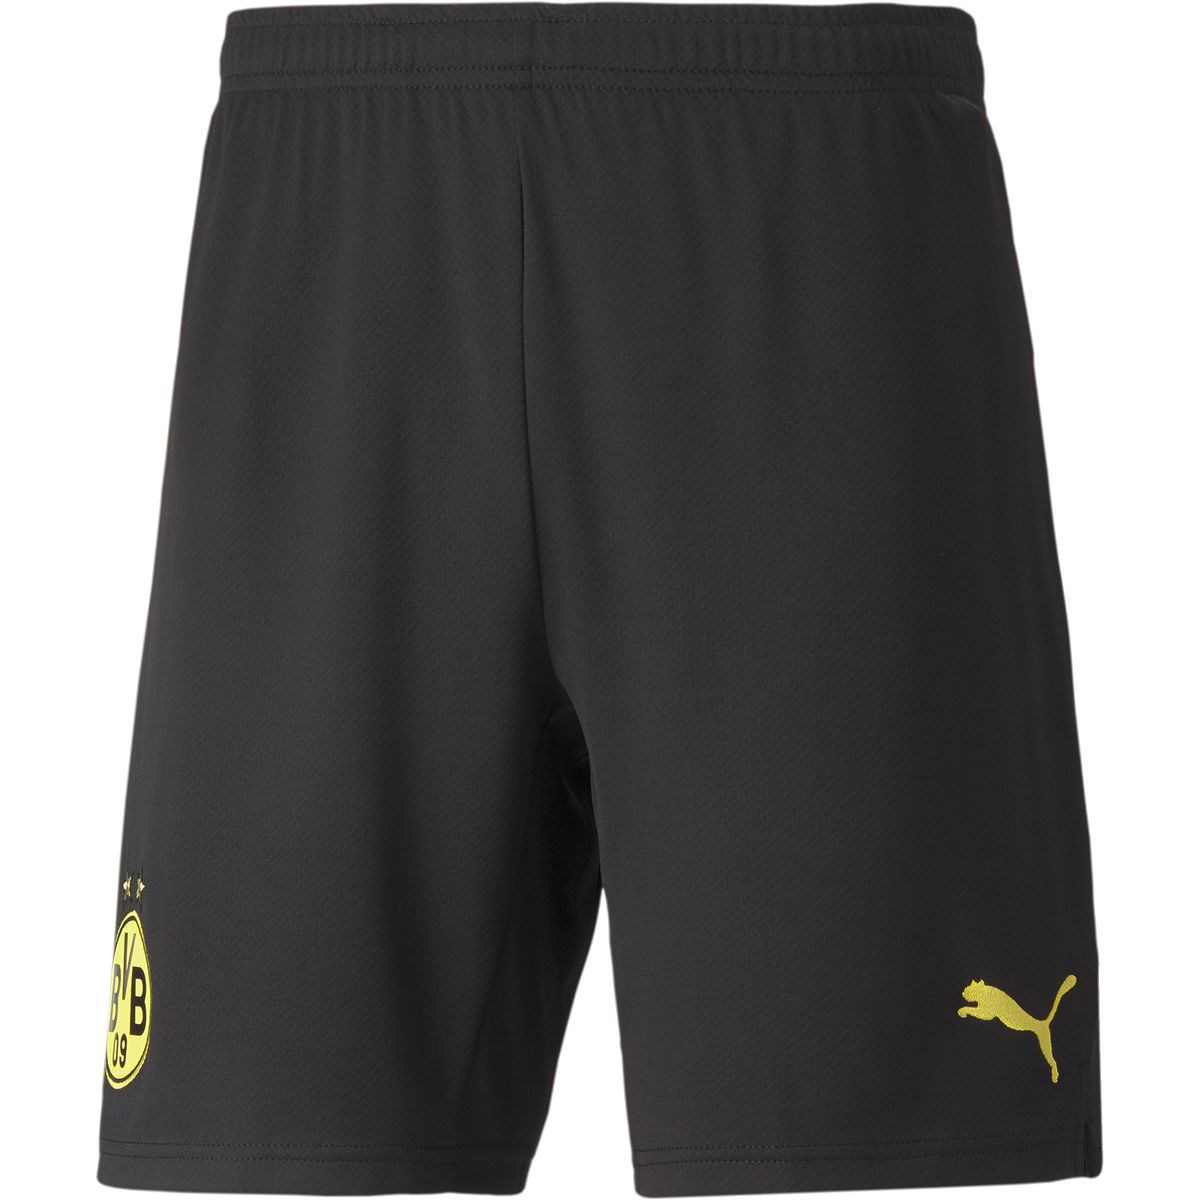 Puma BVB Shorts Replica Herren Shorts